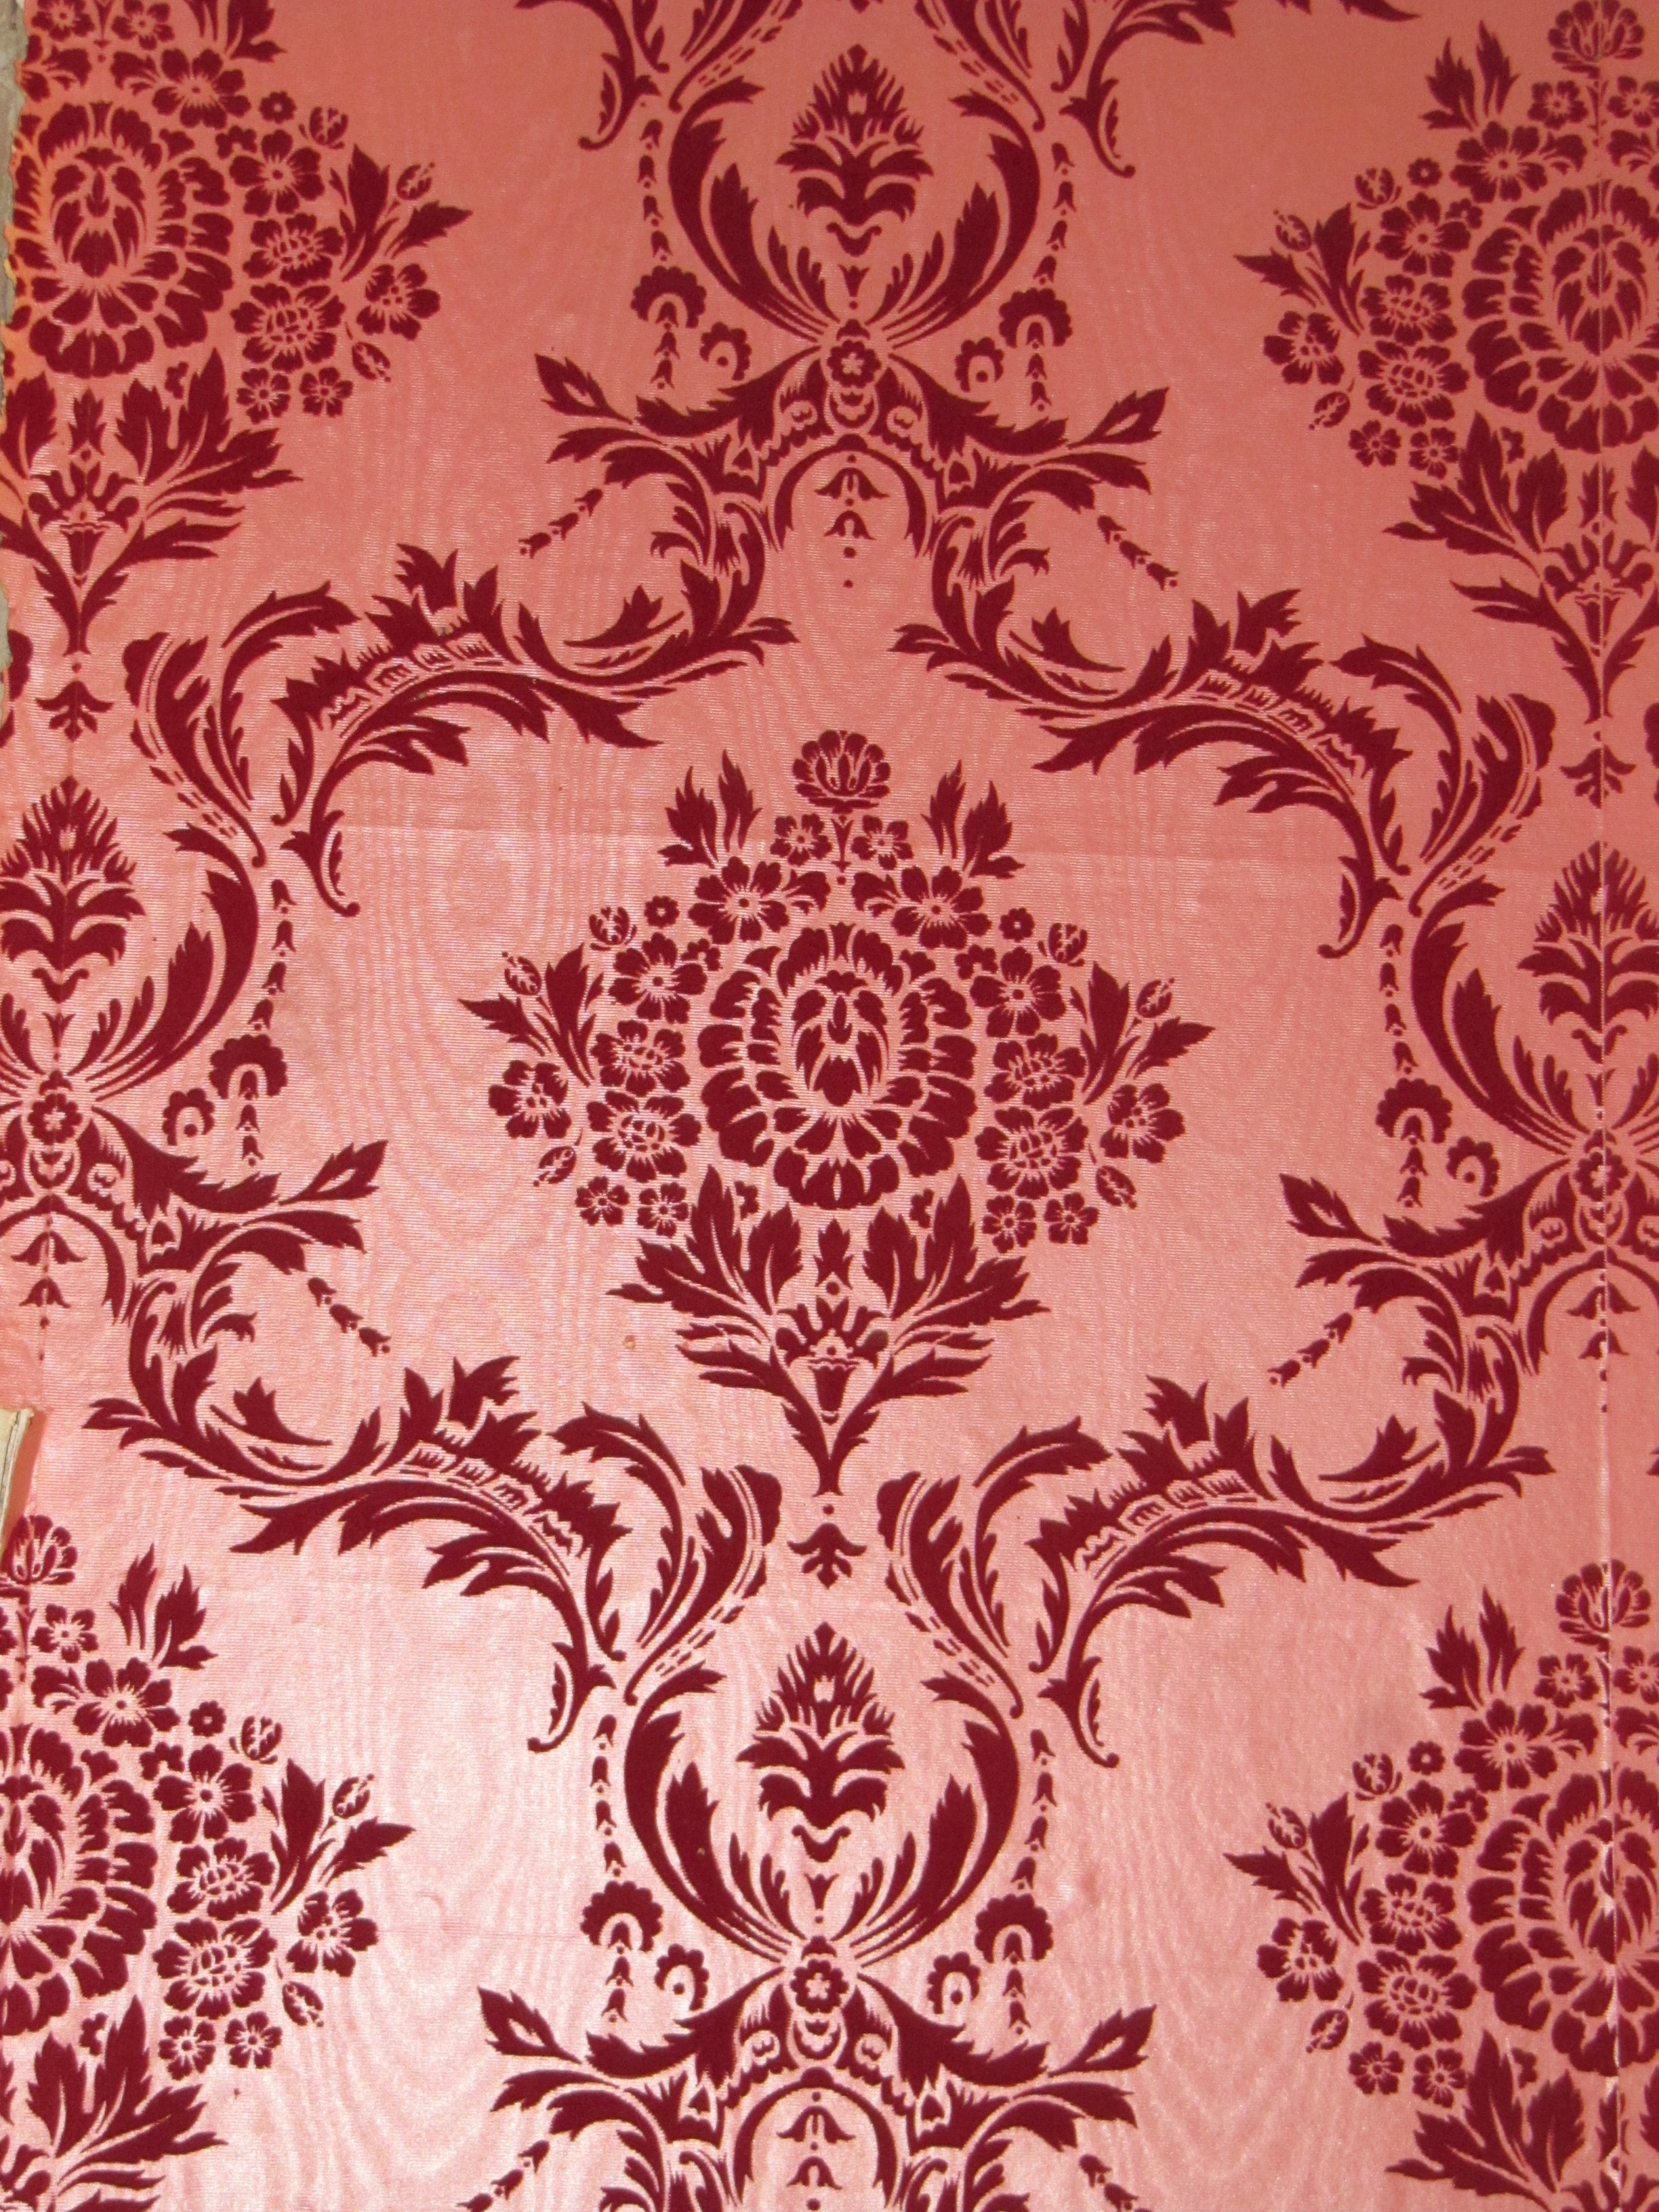 18th Century Wallpaper Designs